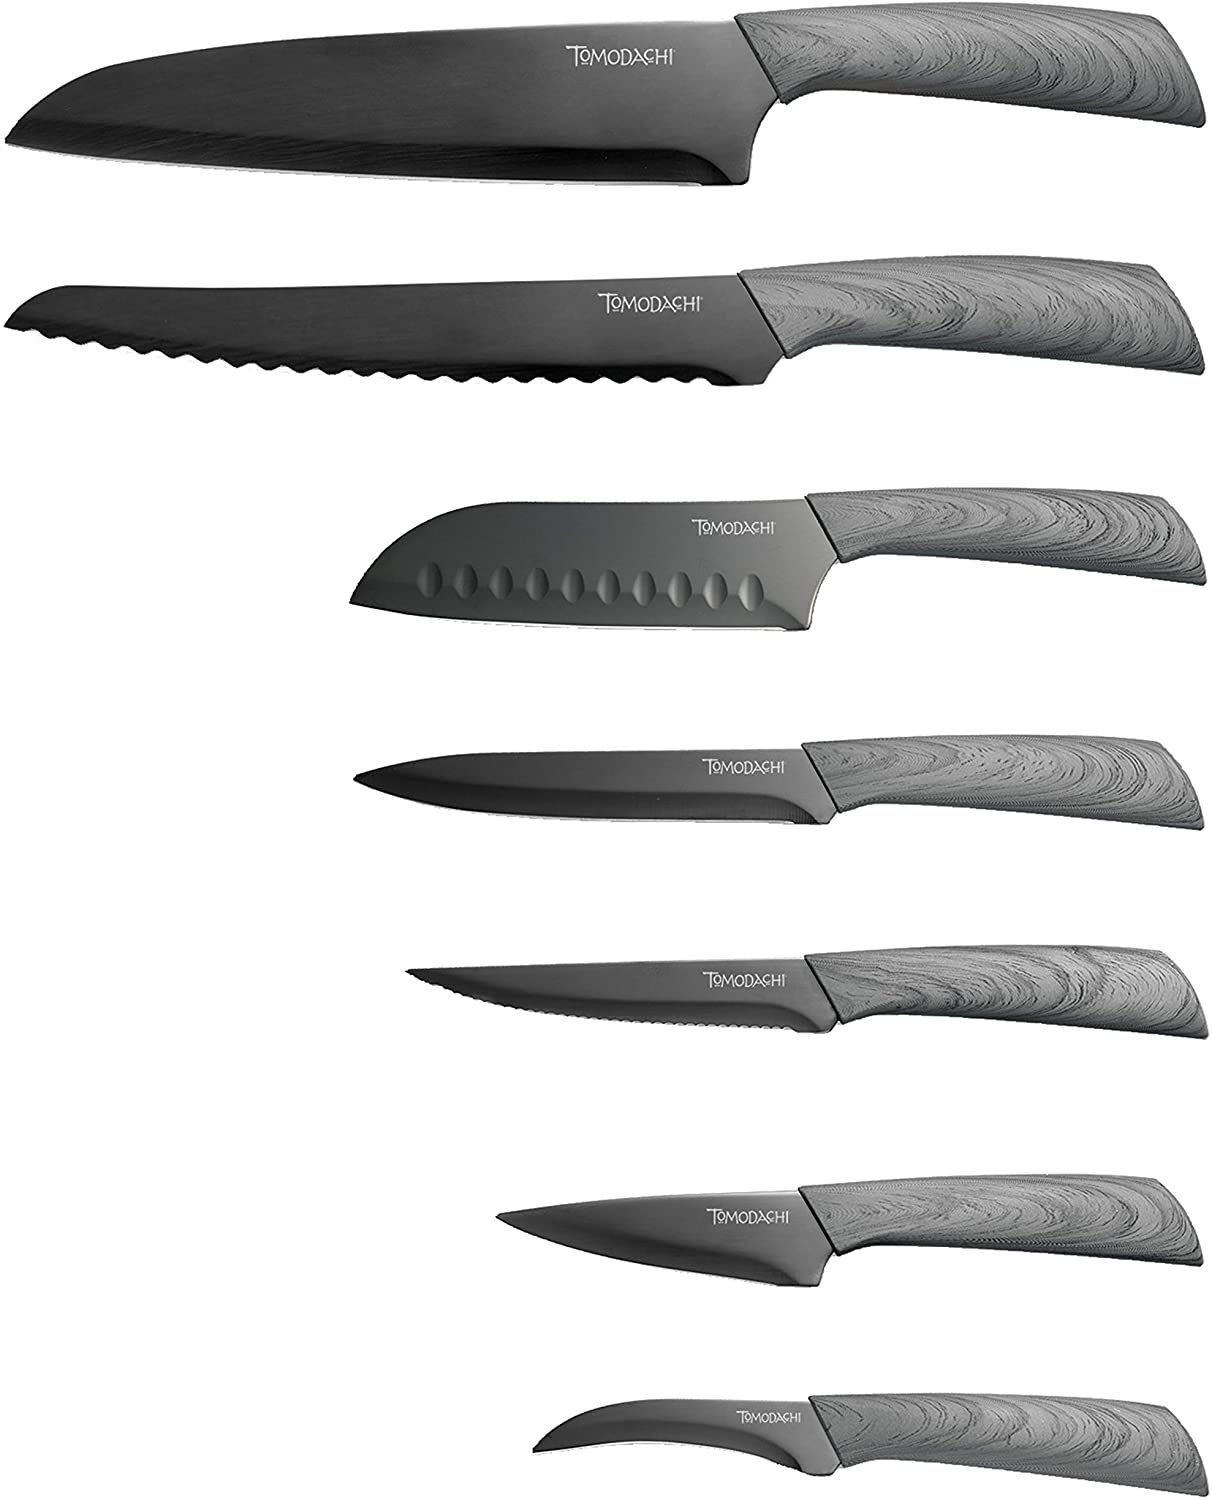 Hampton Forge Tomodachi Raintree Ash – 13 Piece Knife Block Set